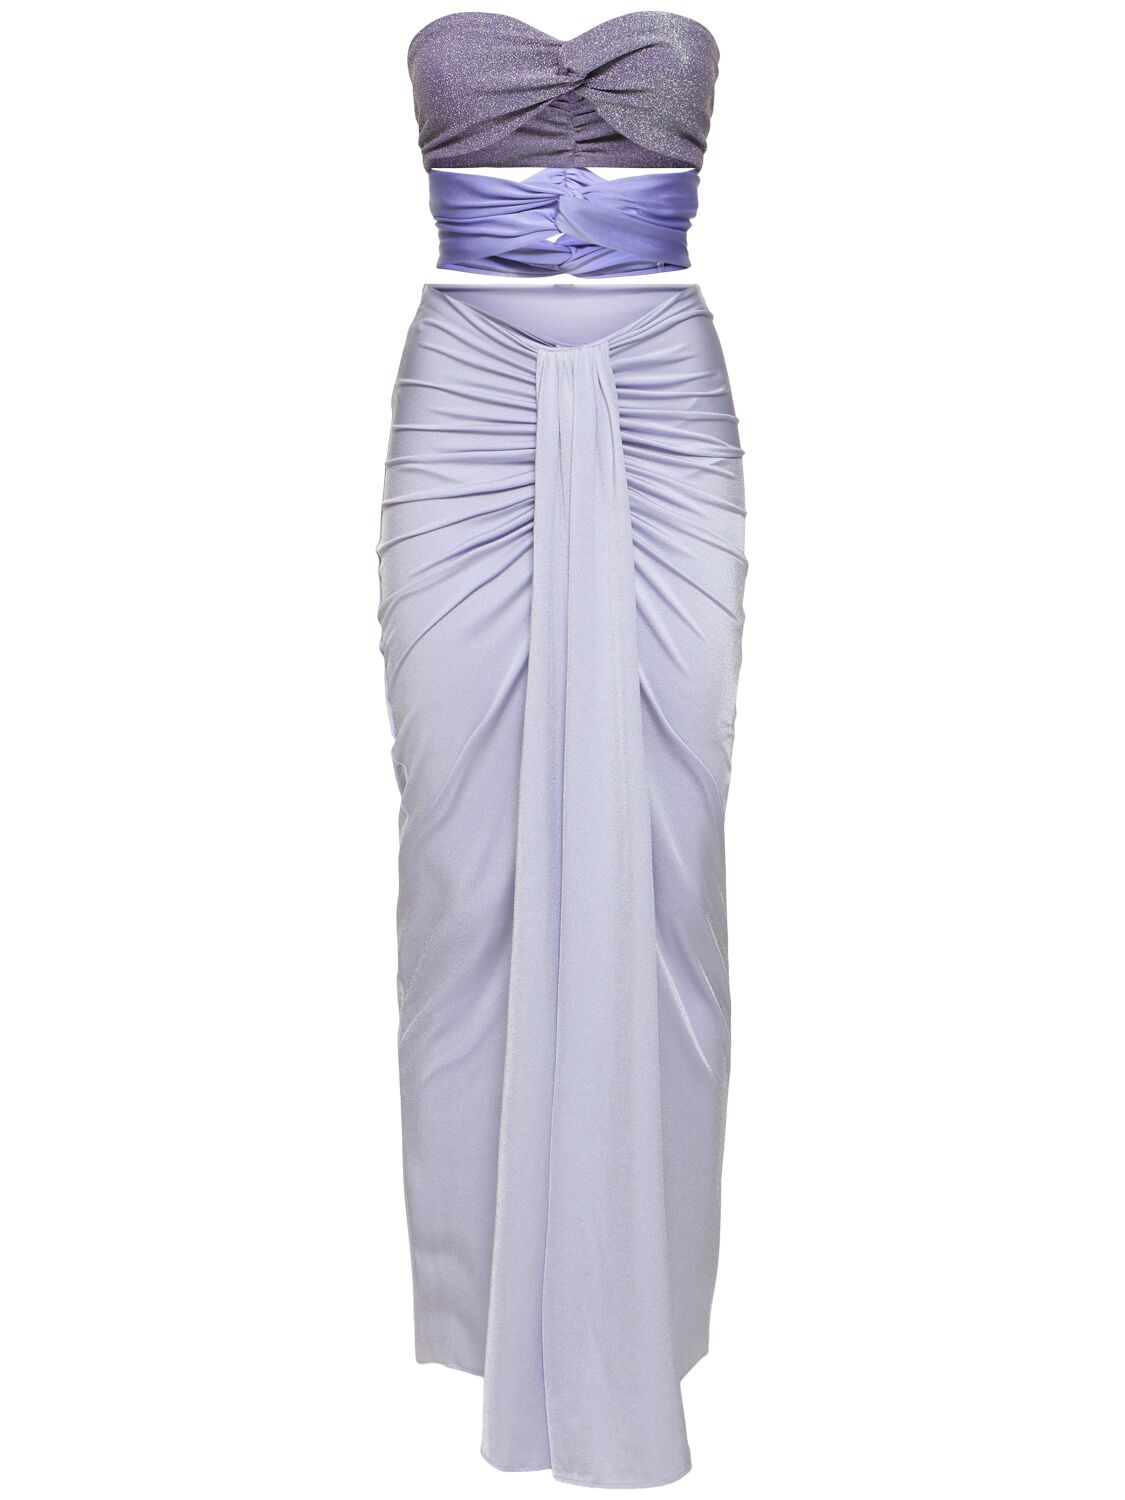 Giselle Strapless Long Dress W/ Cutouts